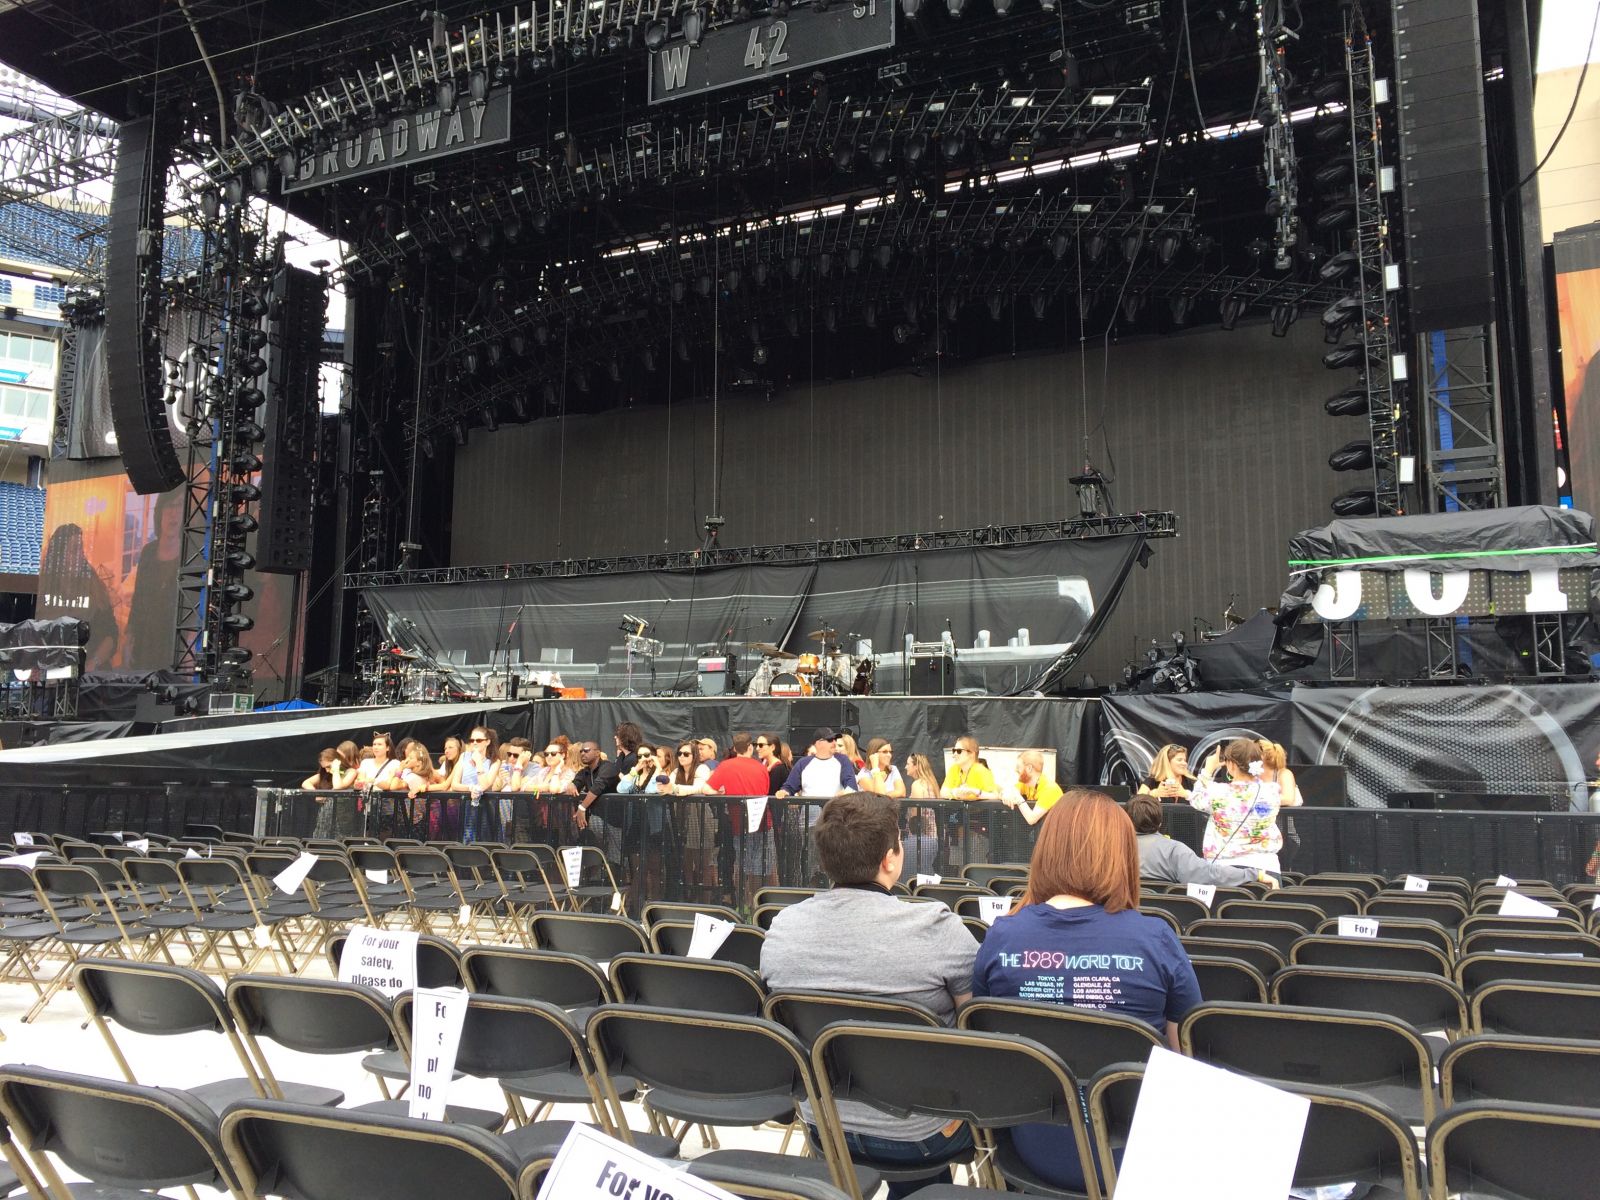 Taylor Swift Concert Seating Chart Gillette Stadium